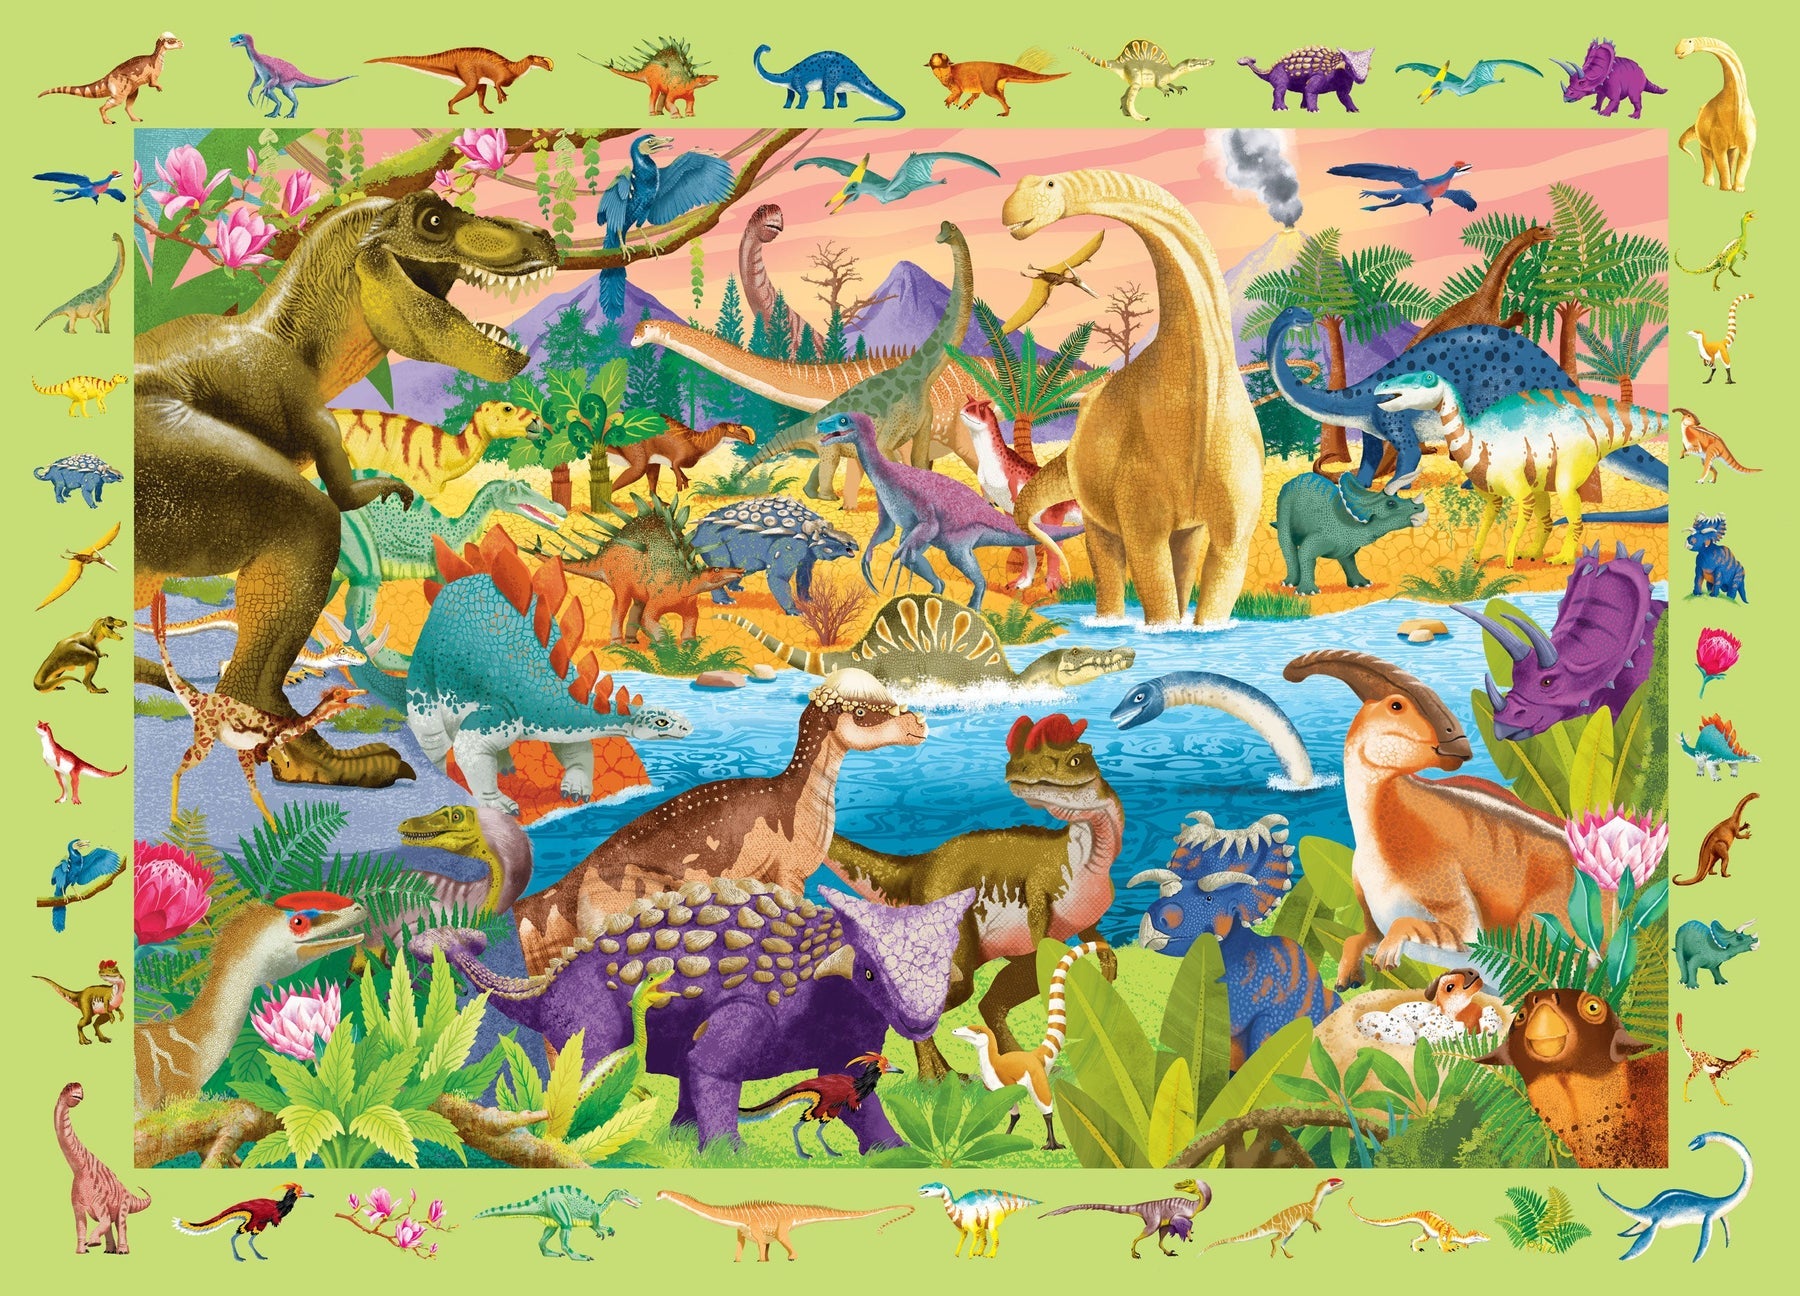 Dinosaurs Seek & Find 100 Piece Puzzle